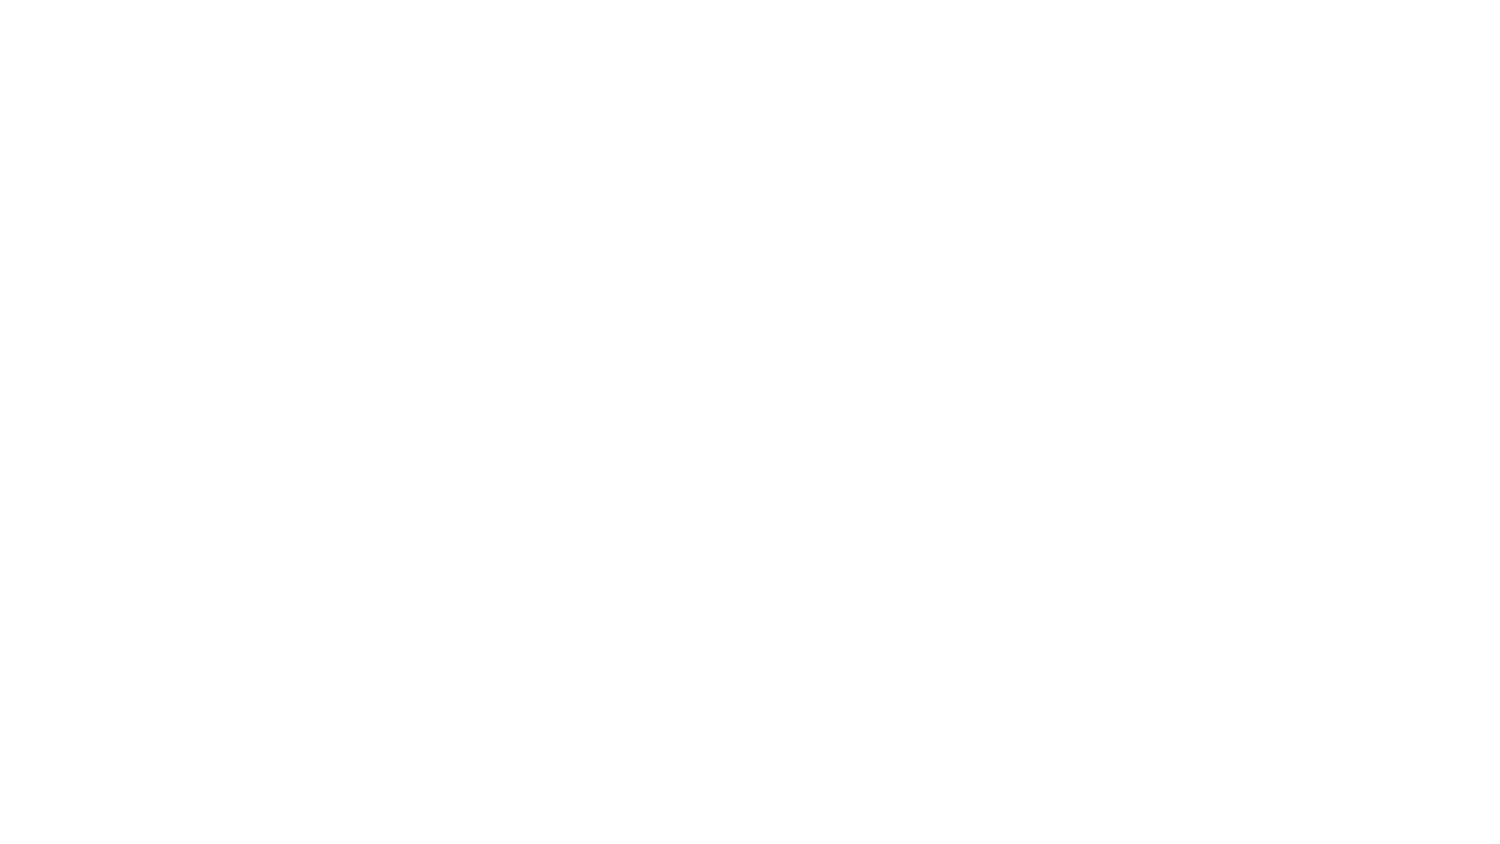 The Albright 